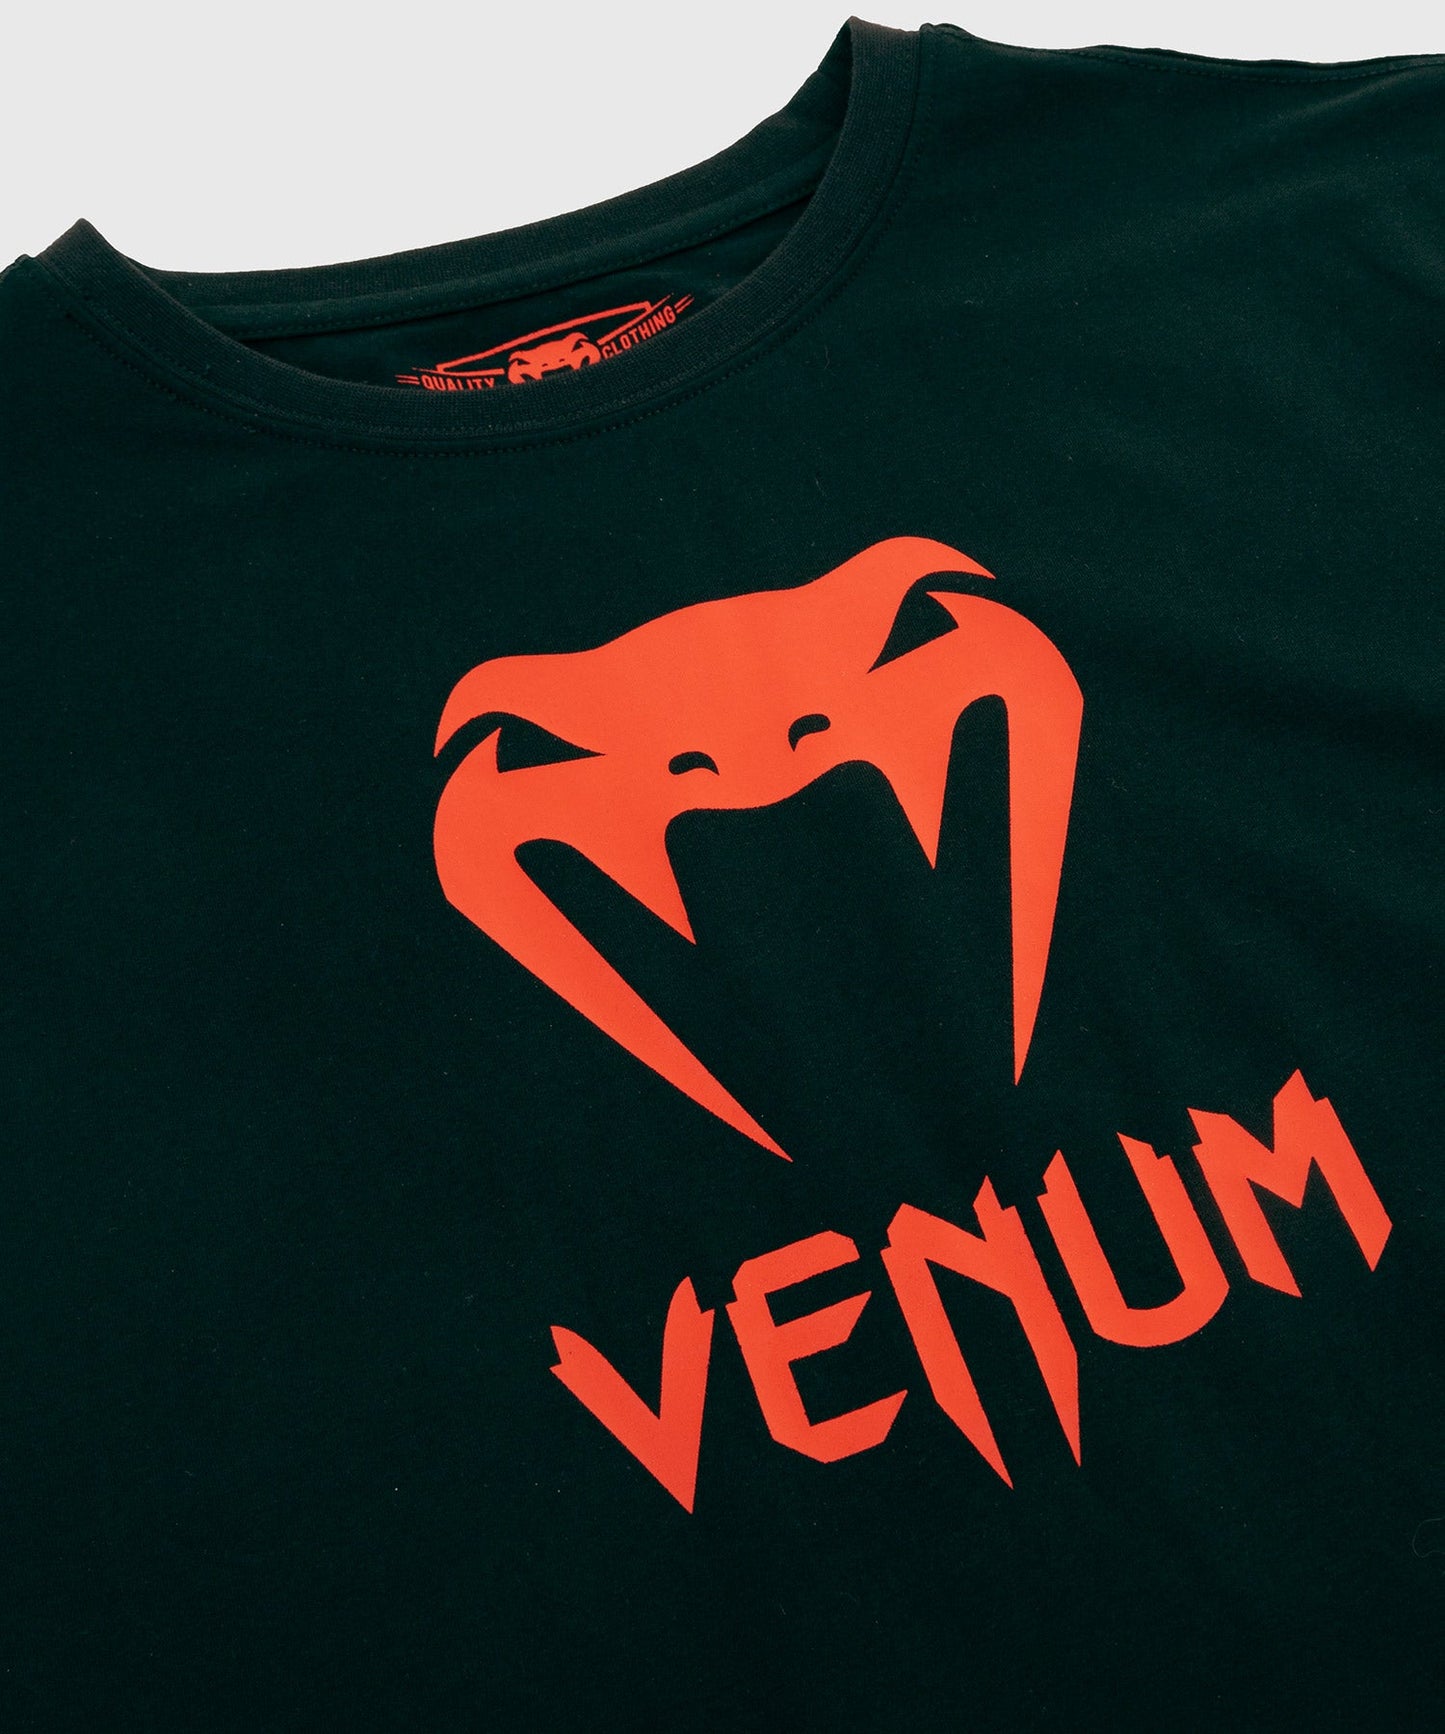 Venum Classic T-shirt - Black/Red